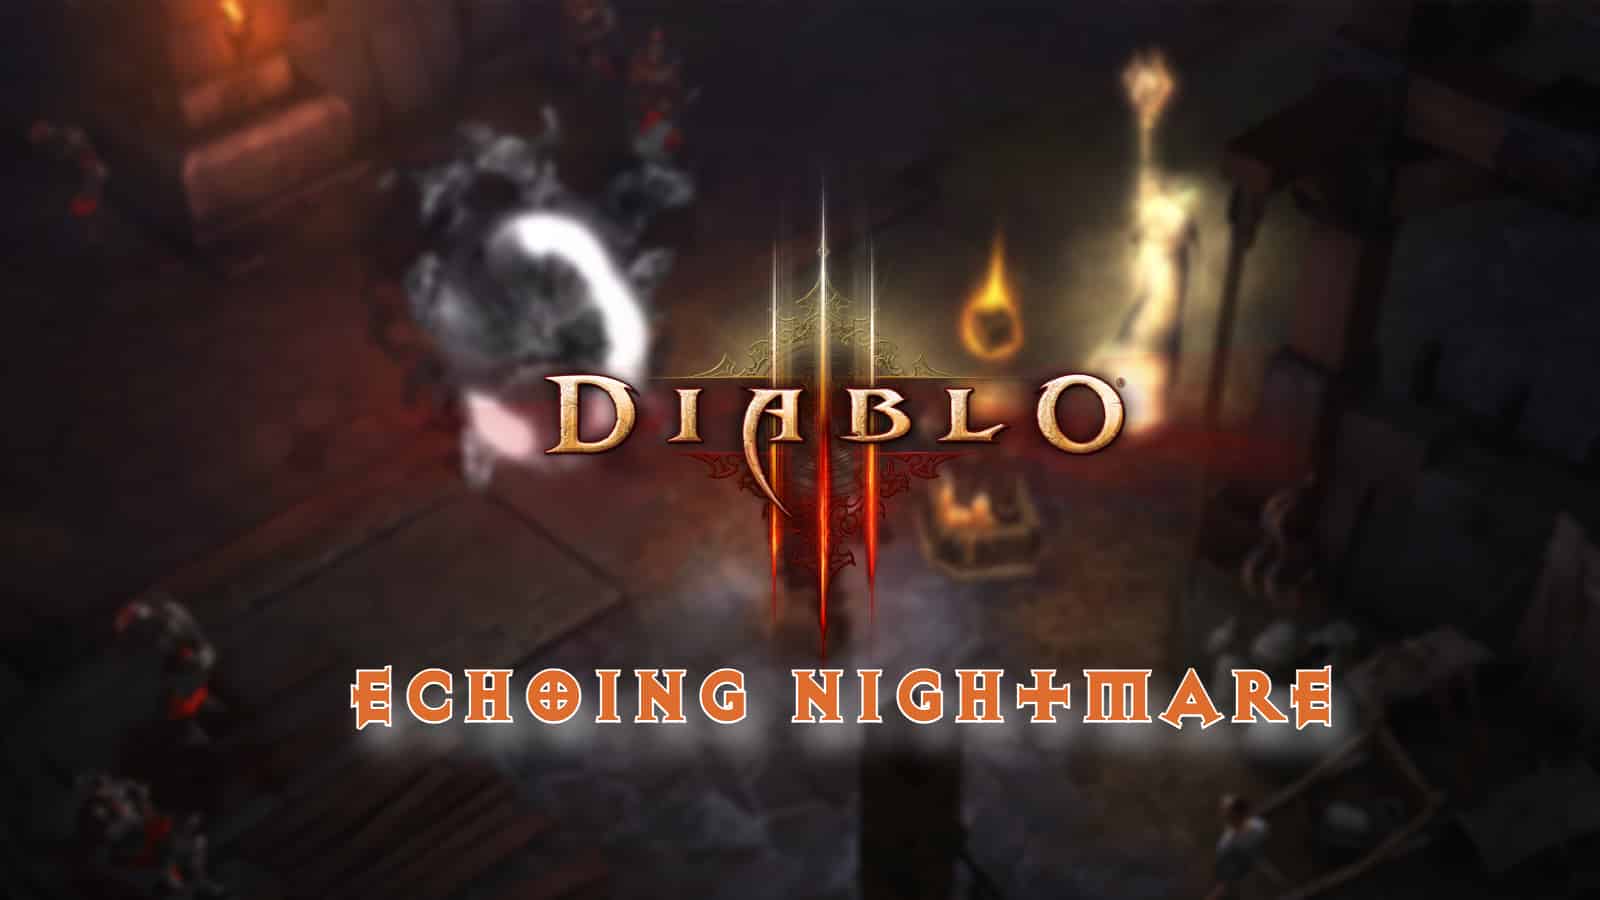 diablo 3 season 26 echoing nightmare limited time mode guide image